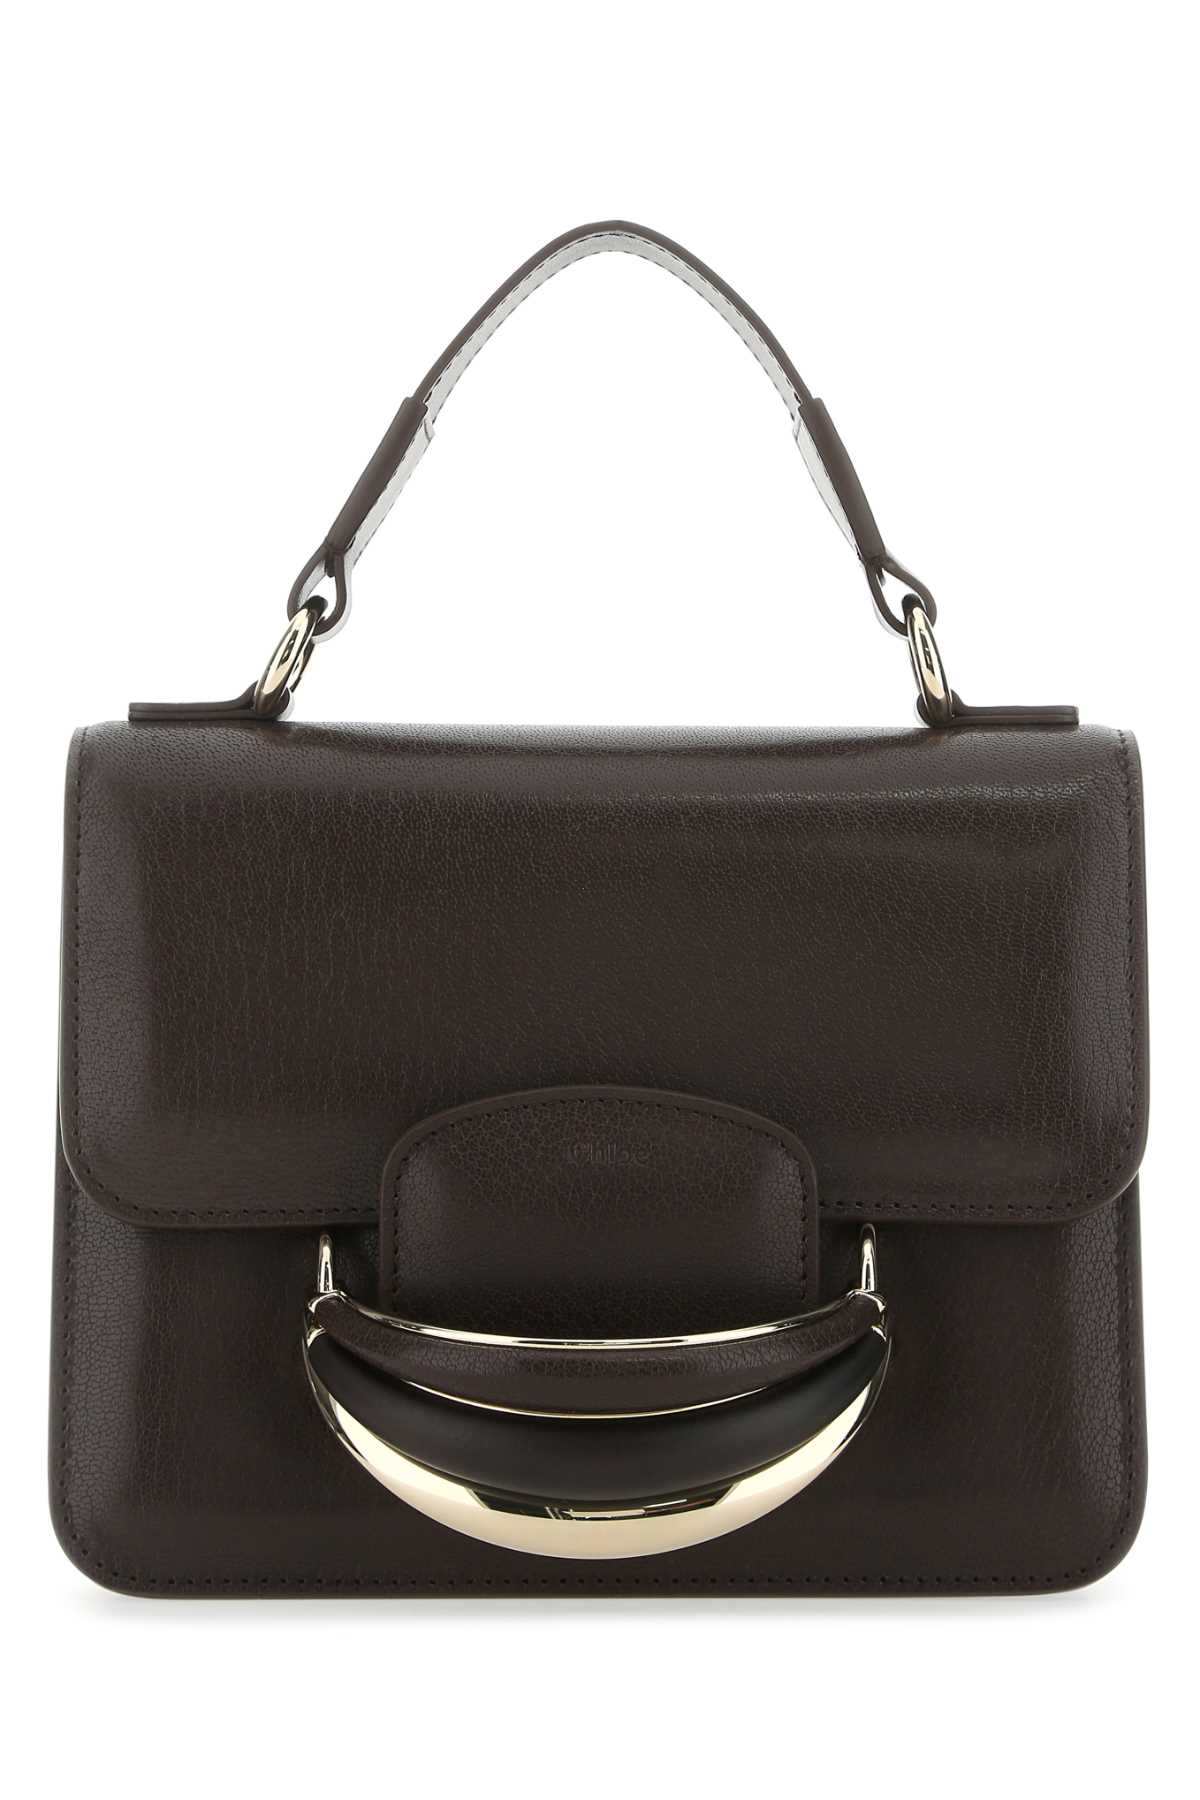 Chloé Dark Brown Leather Small Kattie Handbag